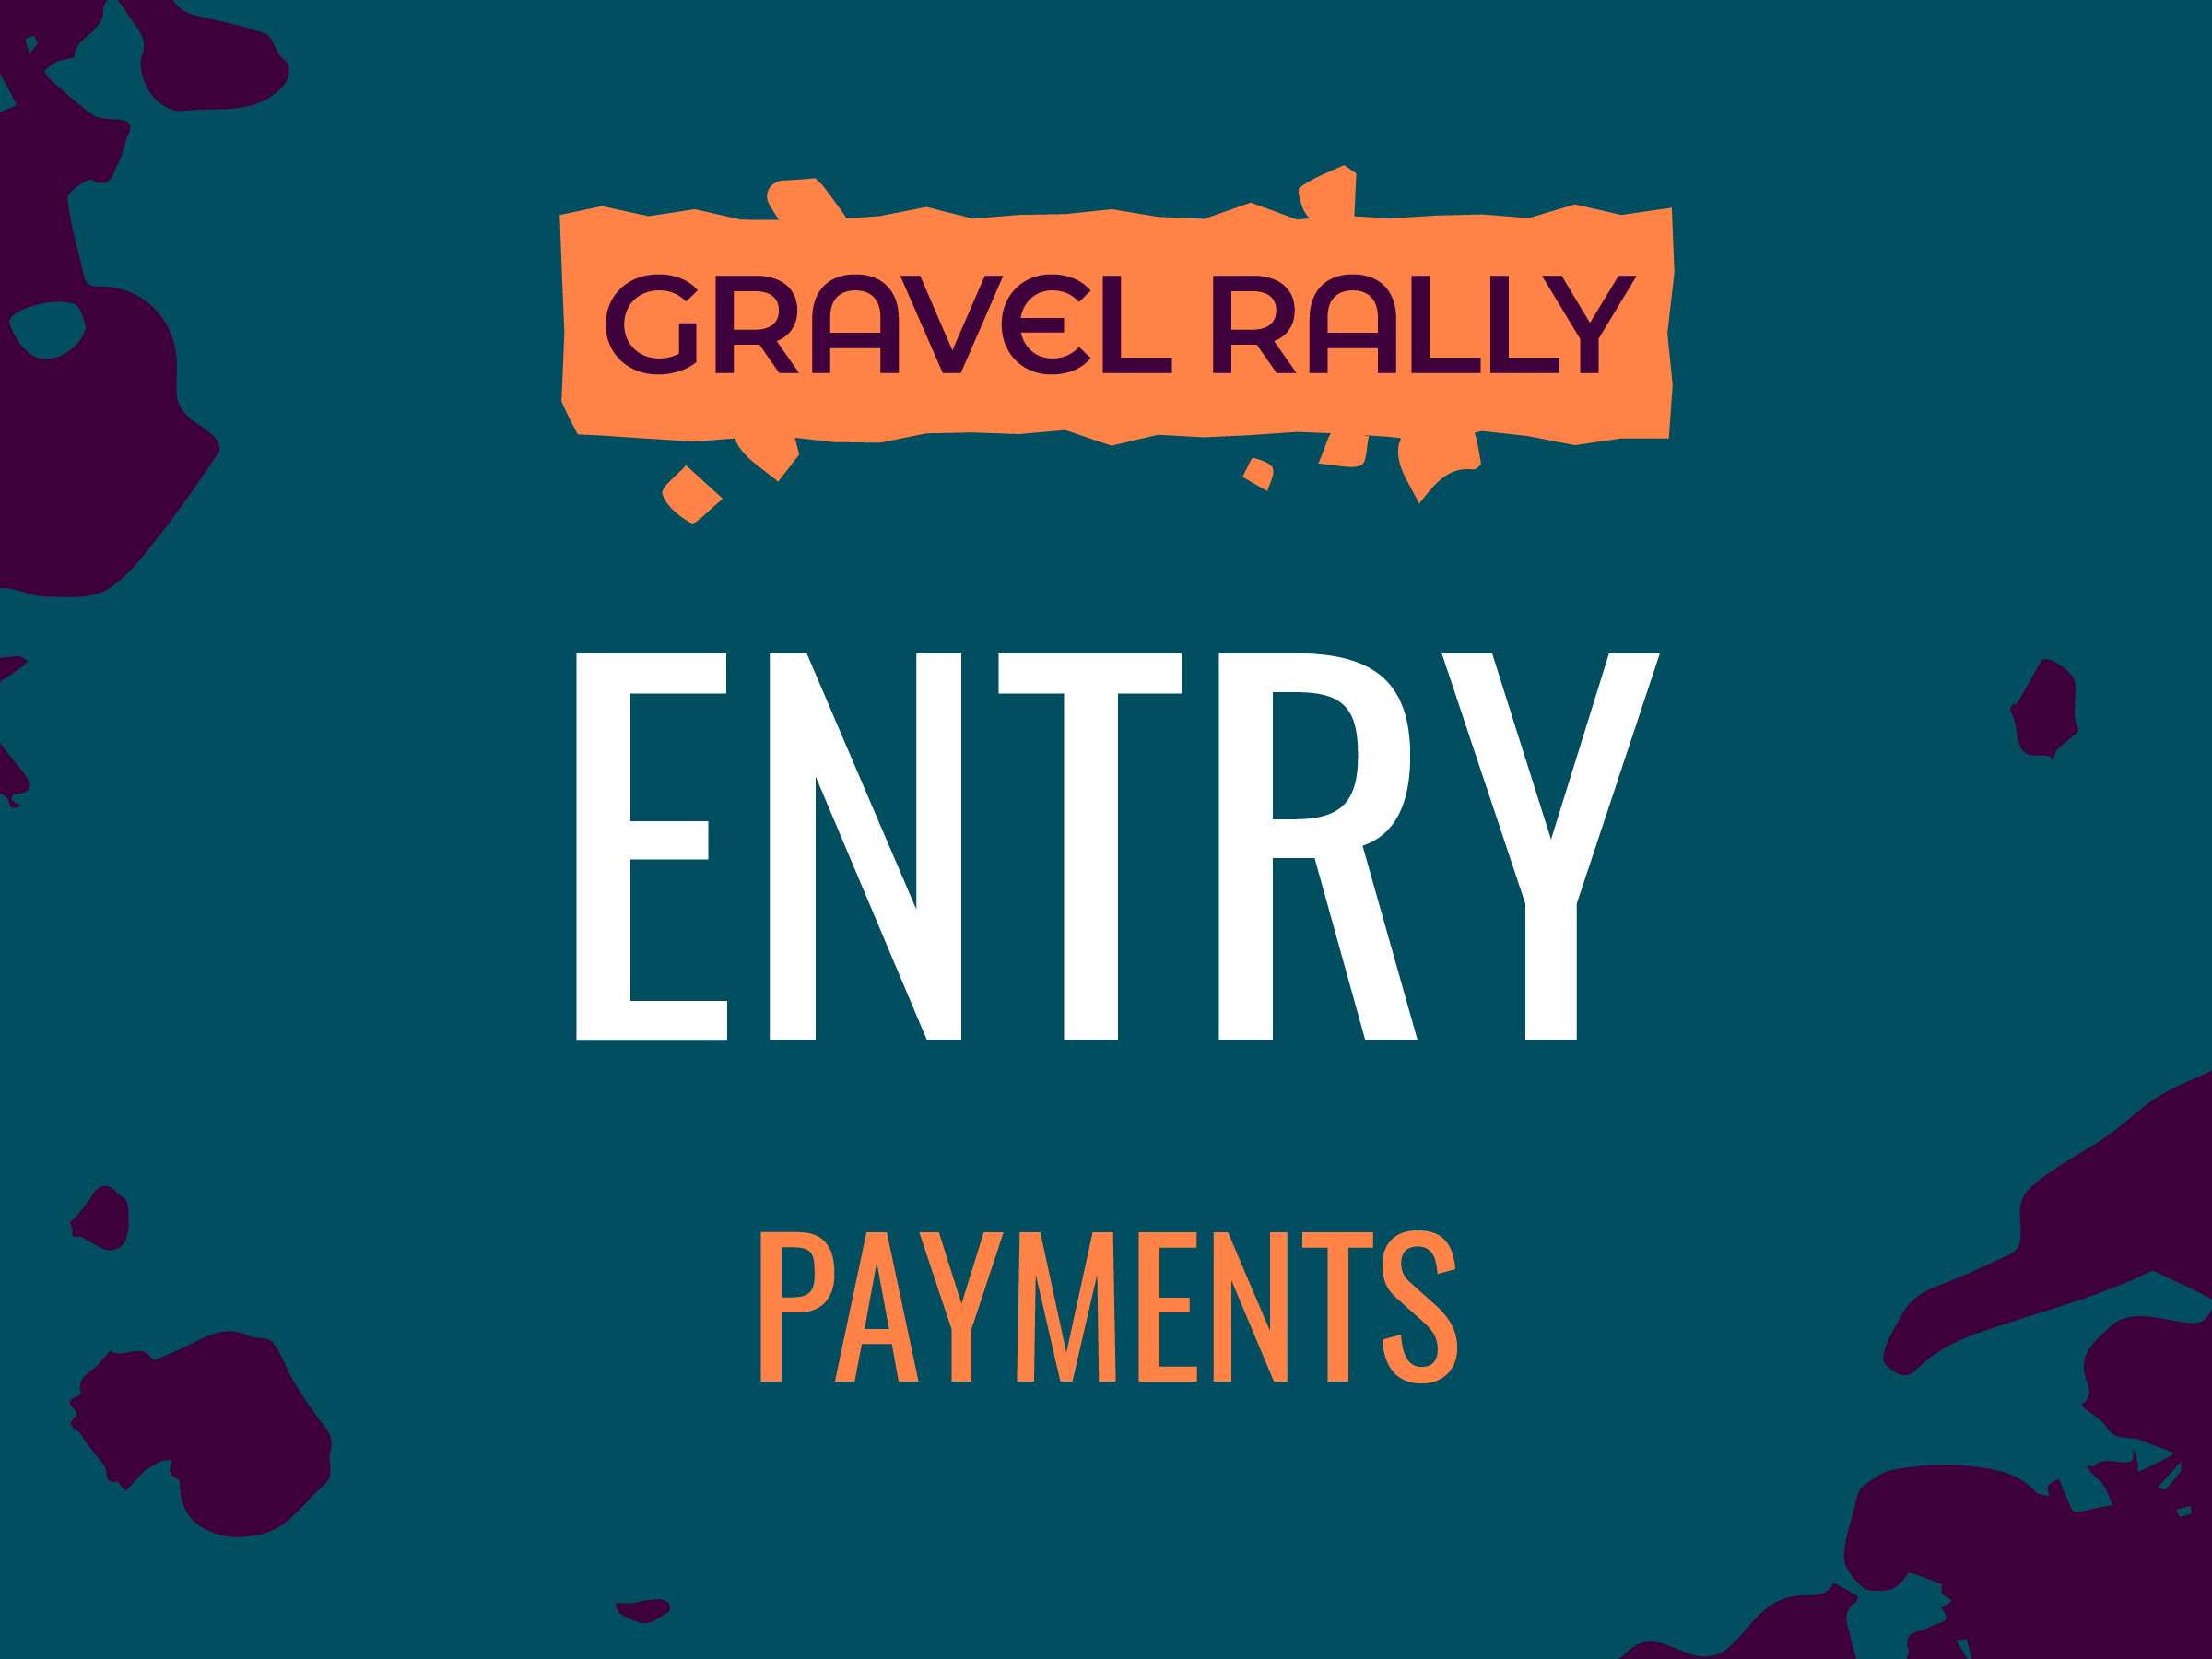 Gravel Rally ENTRY